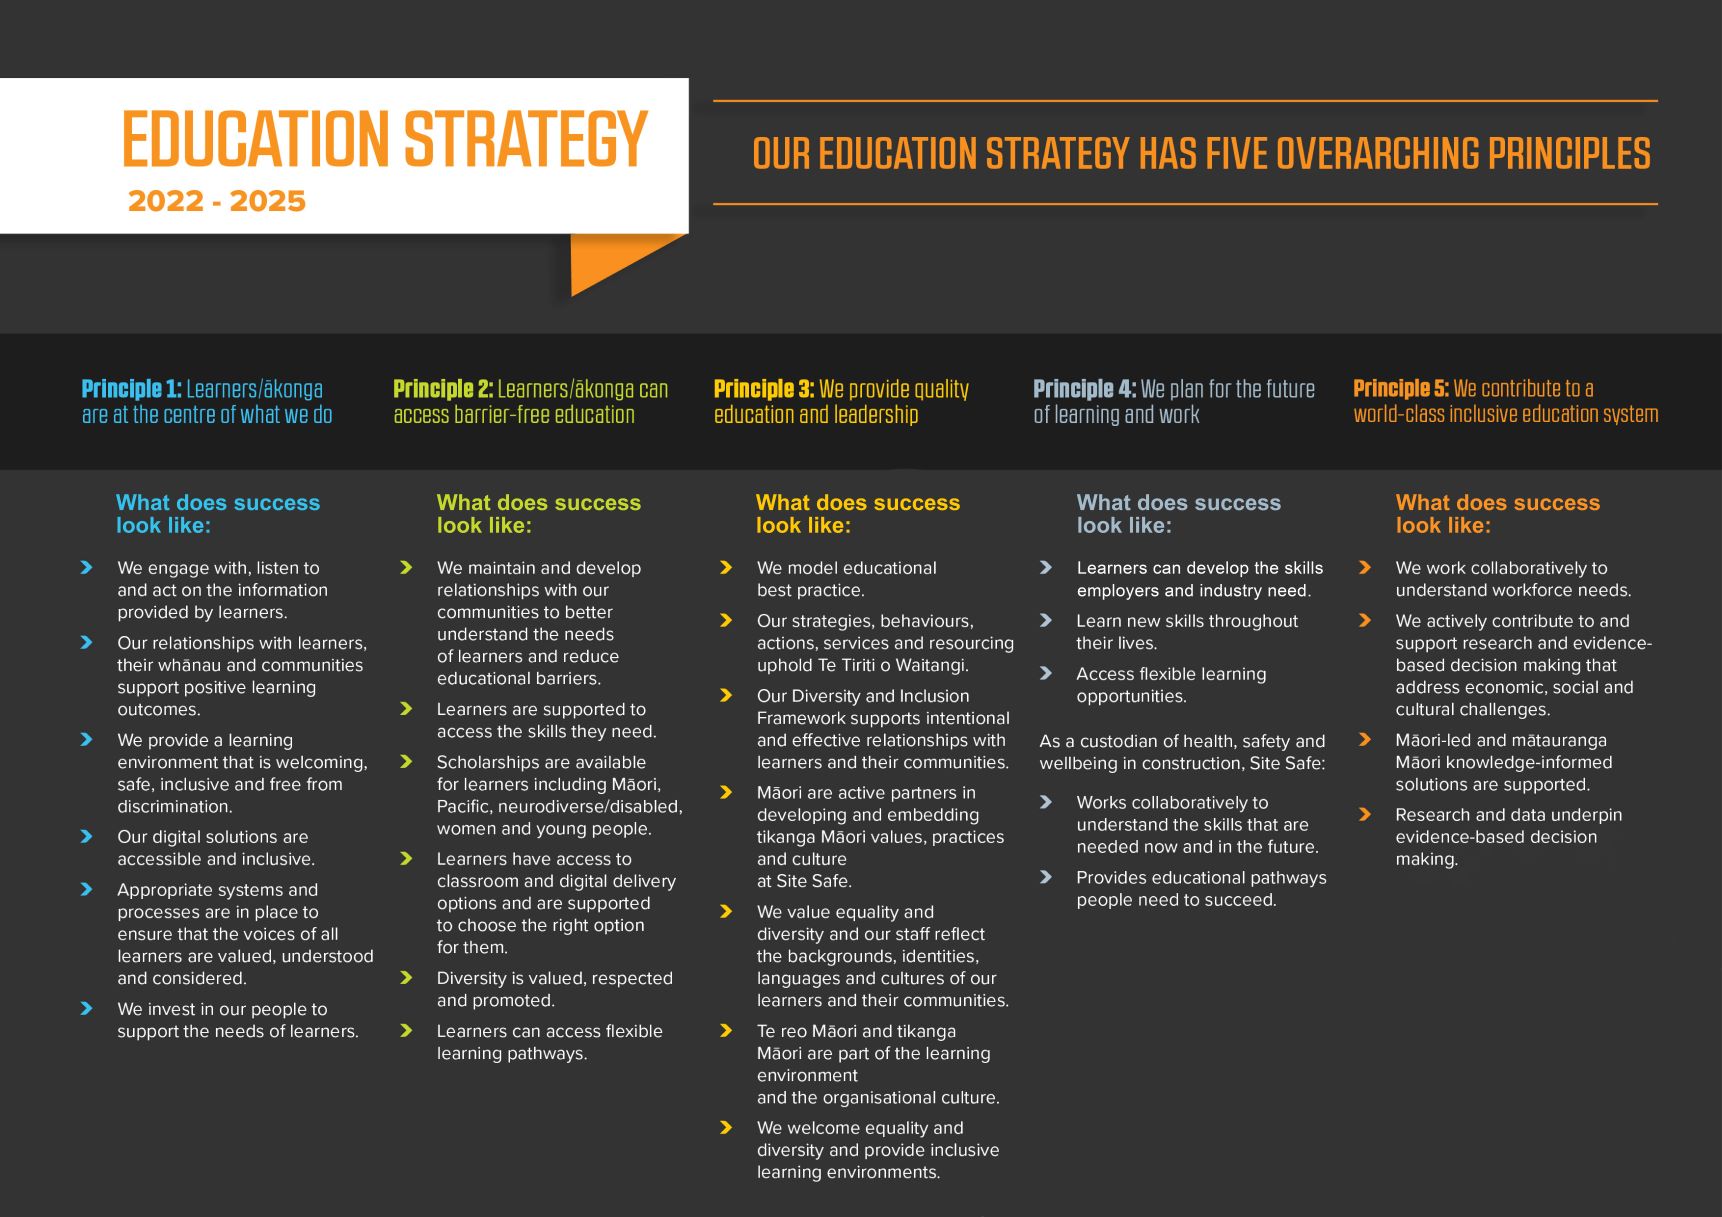 Education strategy_One page_web_v12.2.jpg